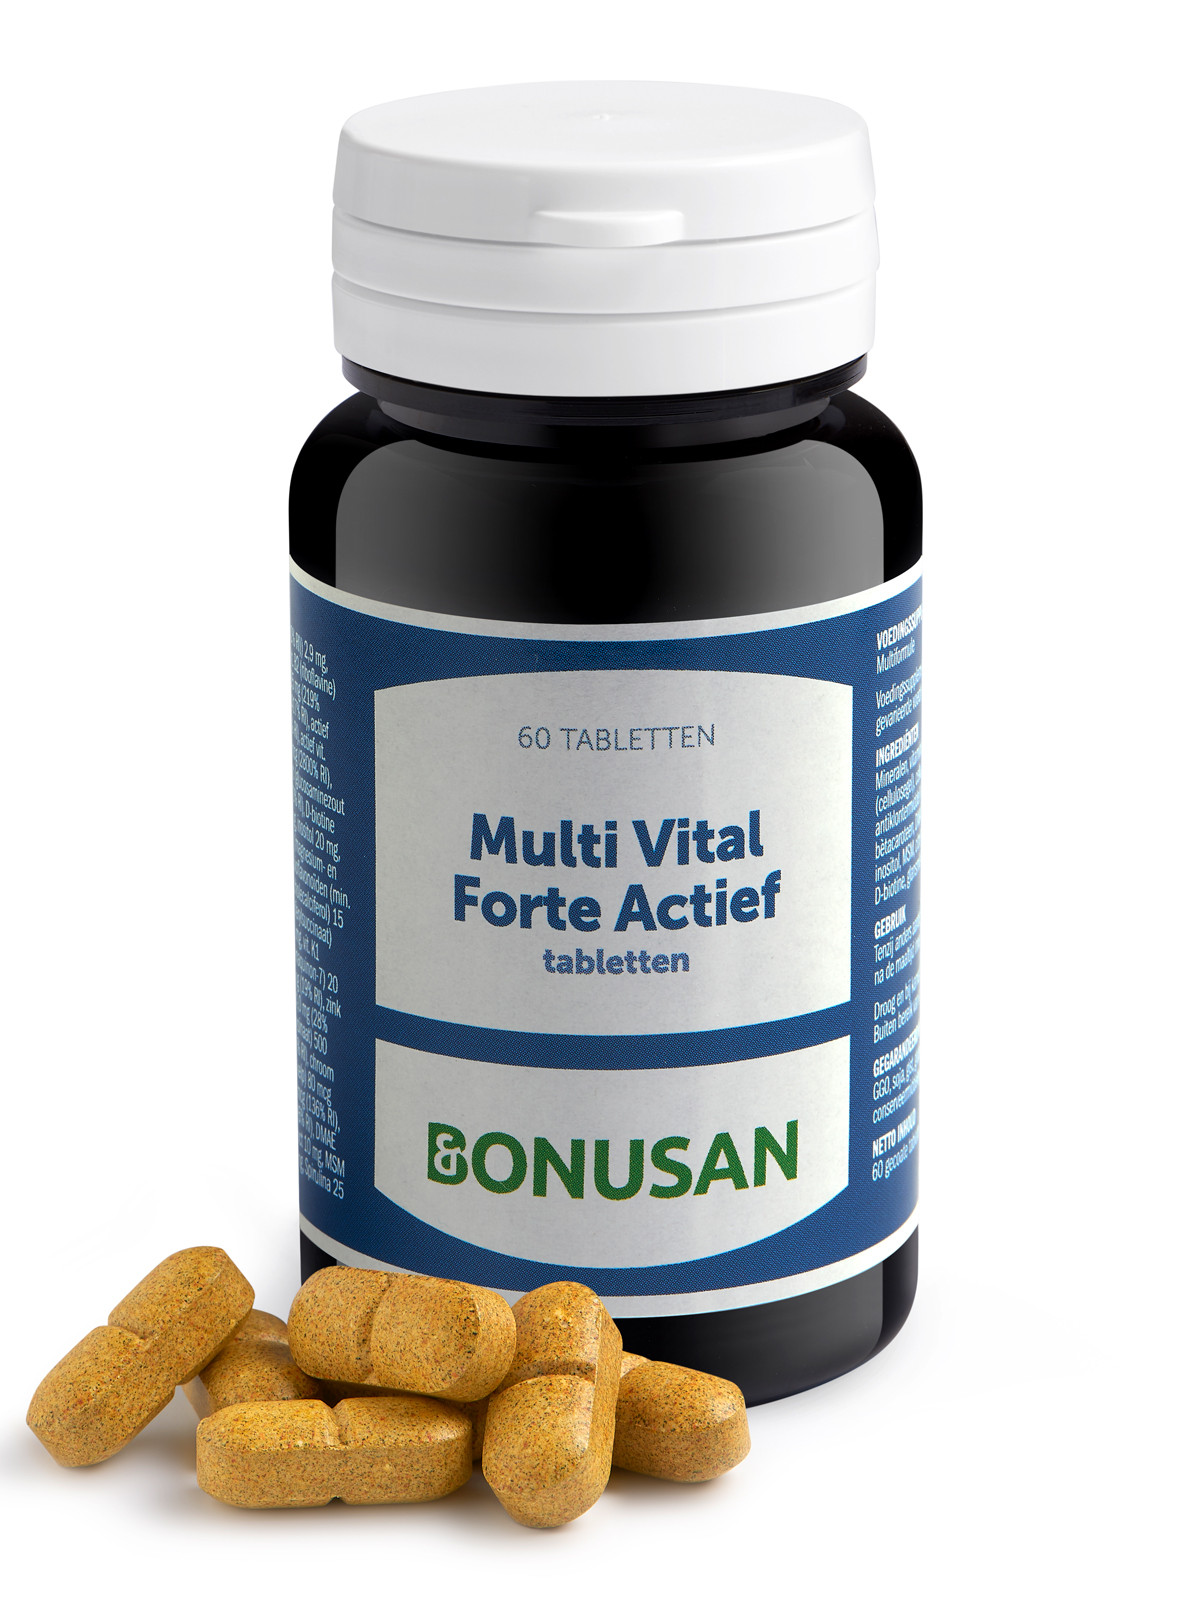 Bonusan - Multi Vital Forte Actief tabletten - 60 stuks